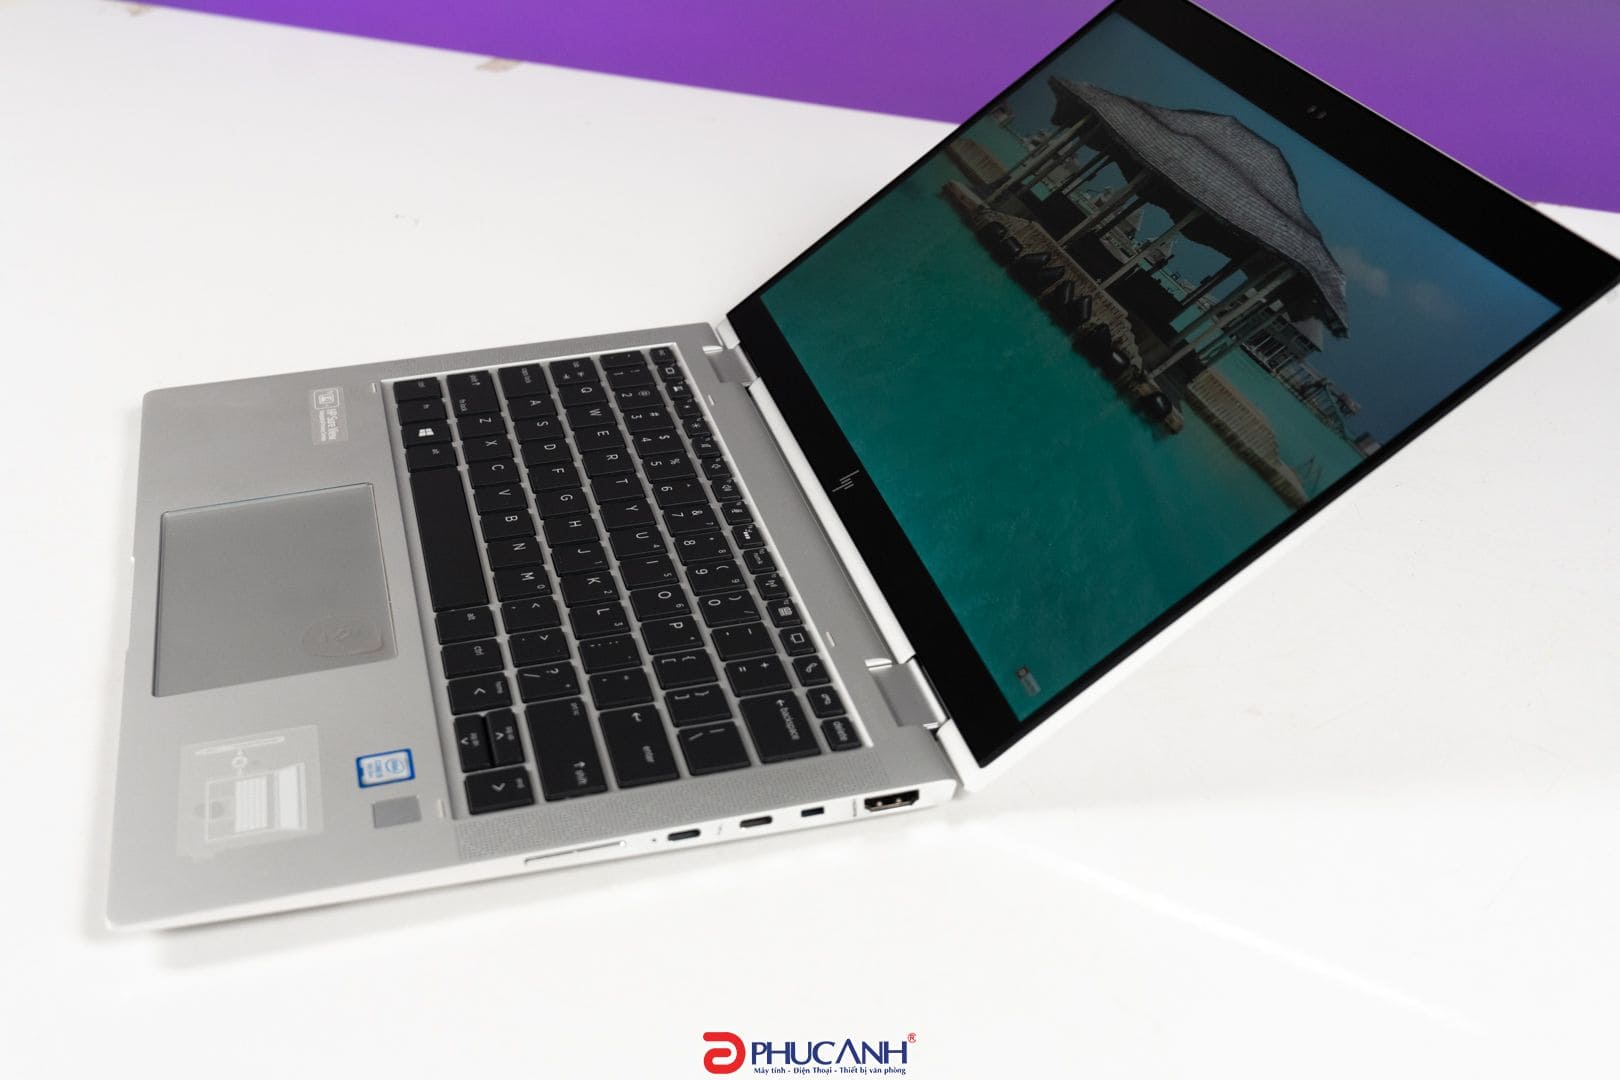 Laptop HP EliteBook x360 1030 G3 5AS43PA